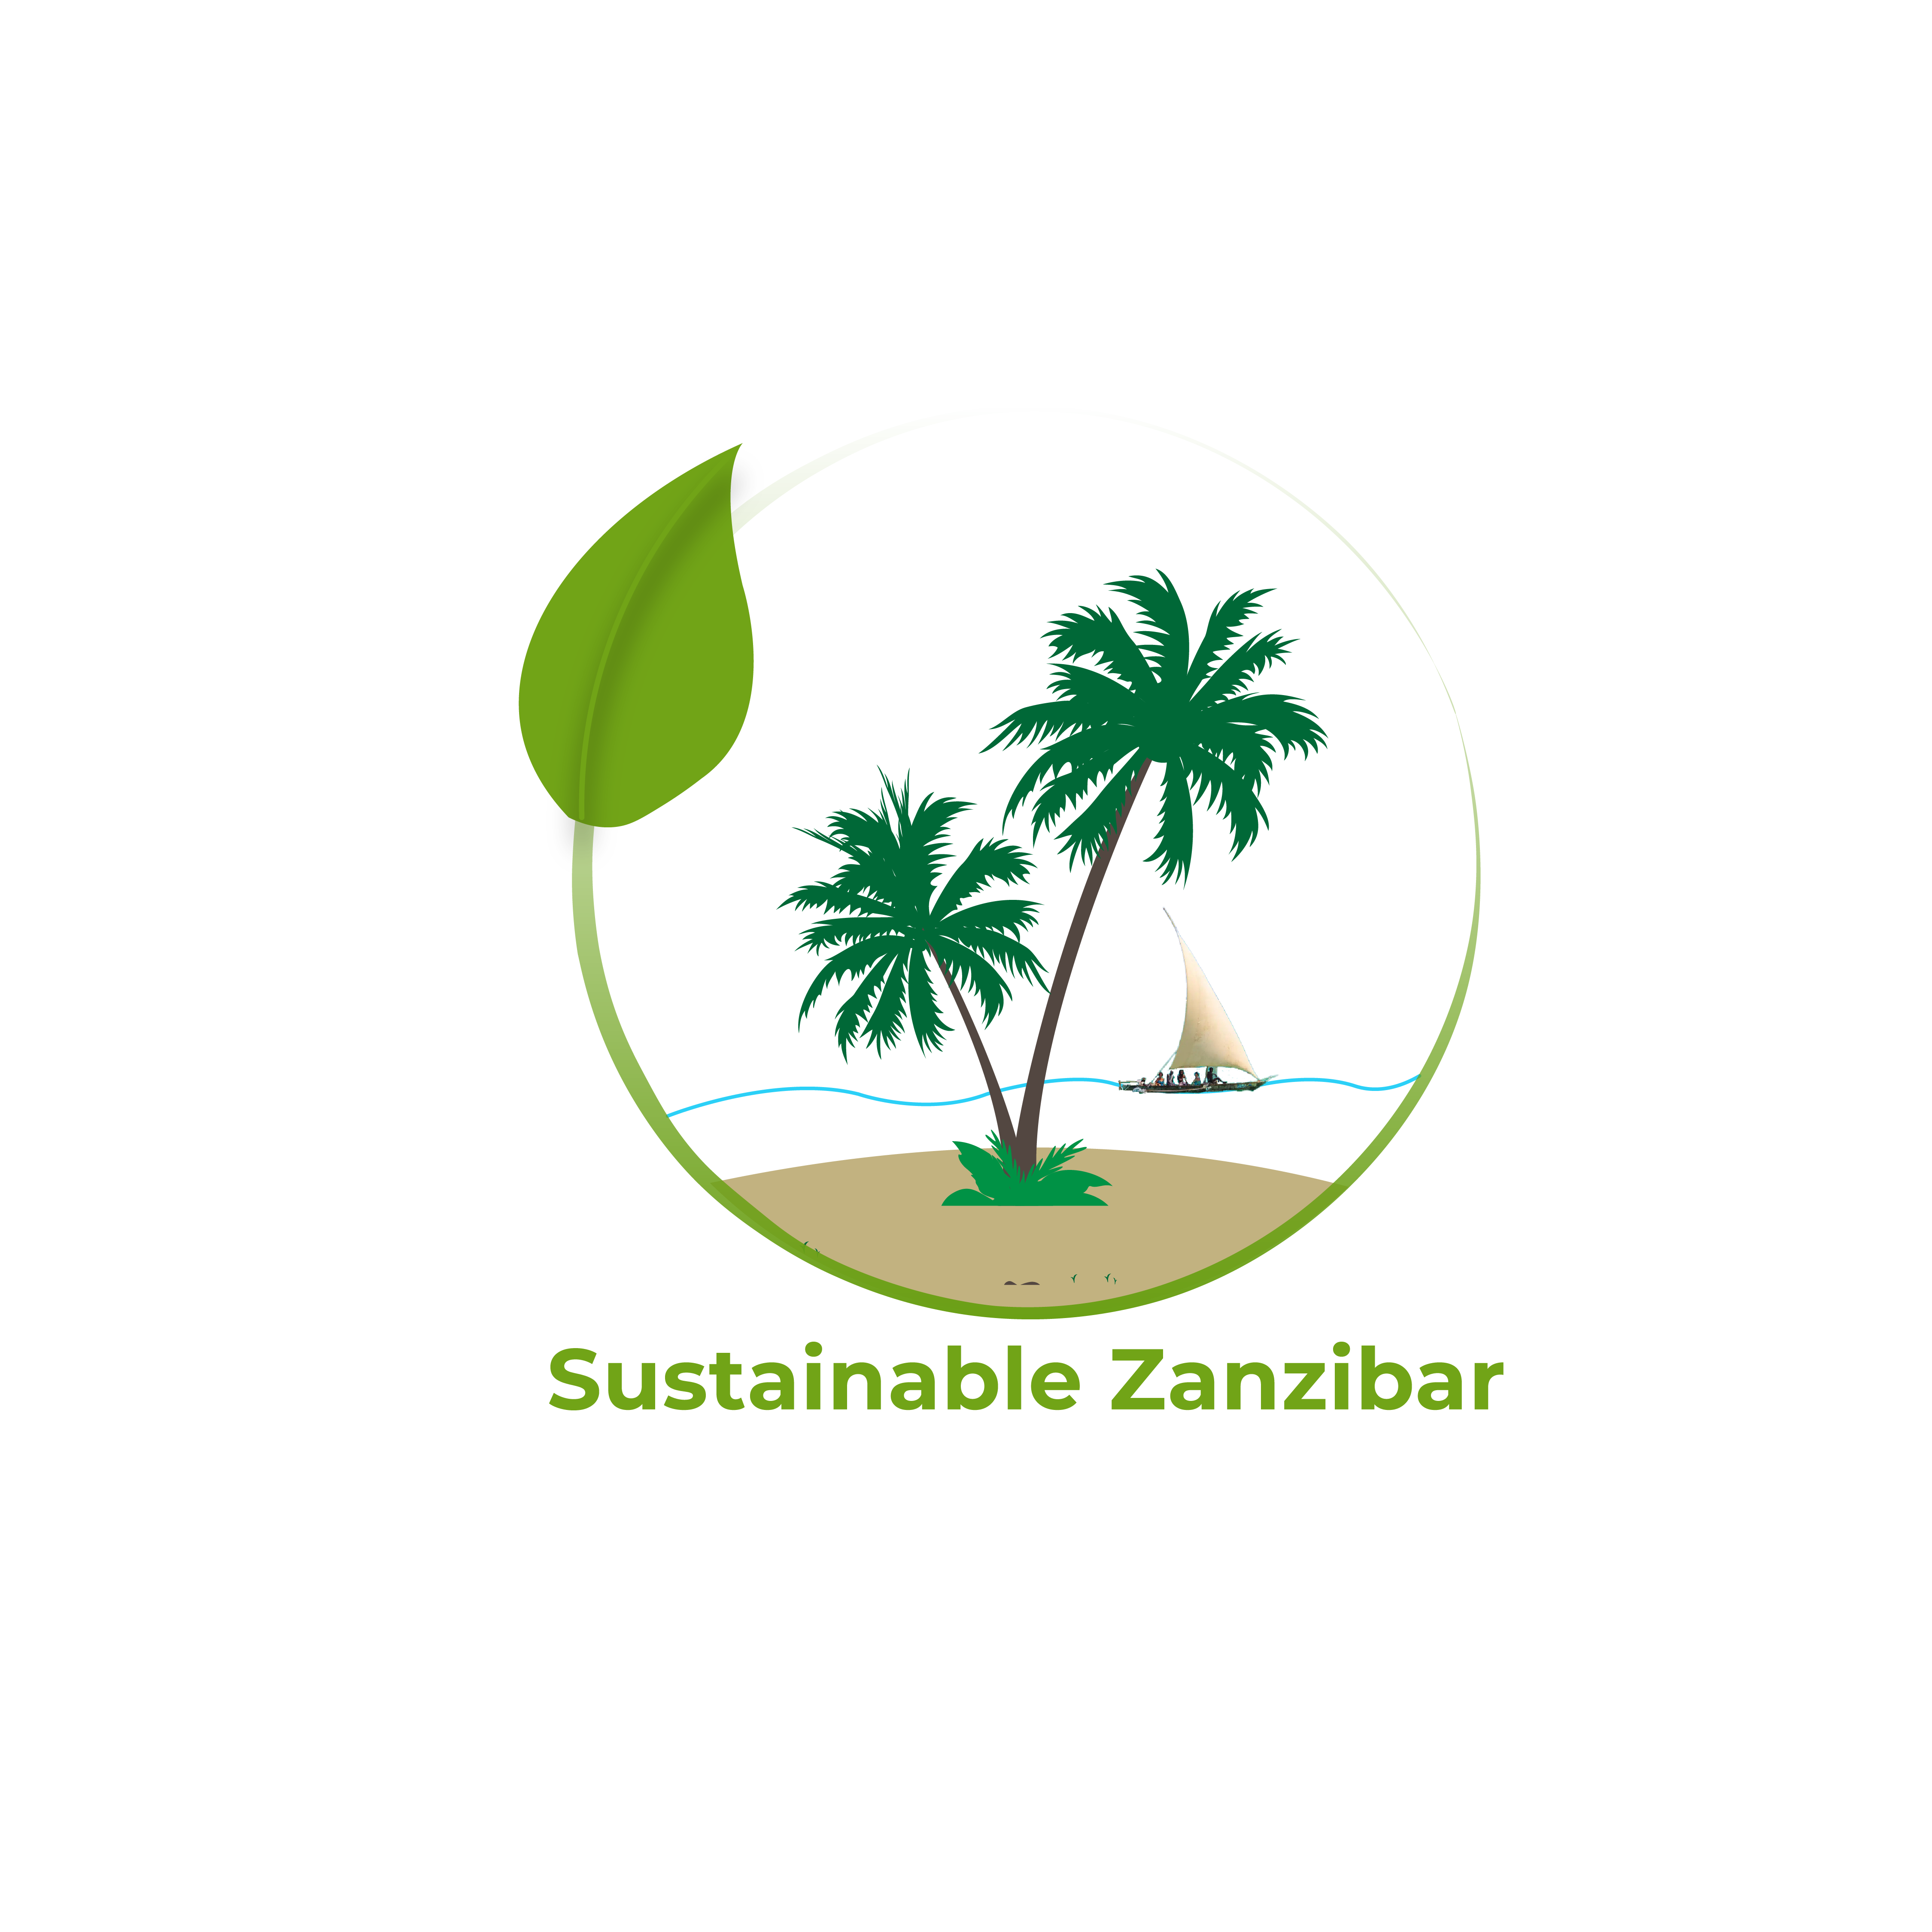 Sustainable Zanzibar